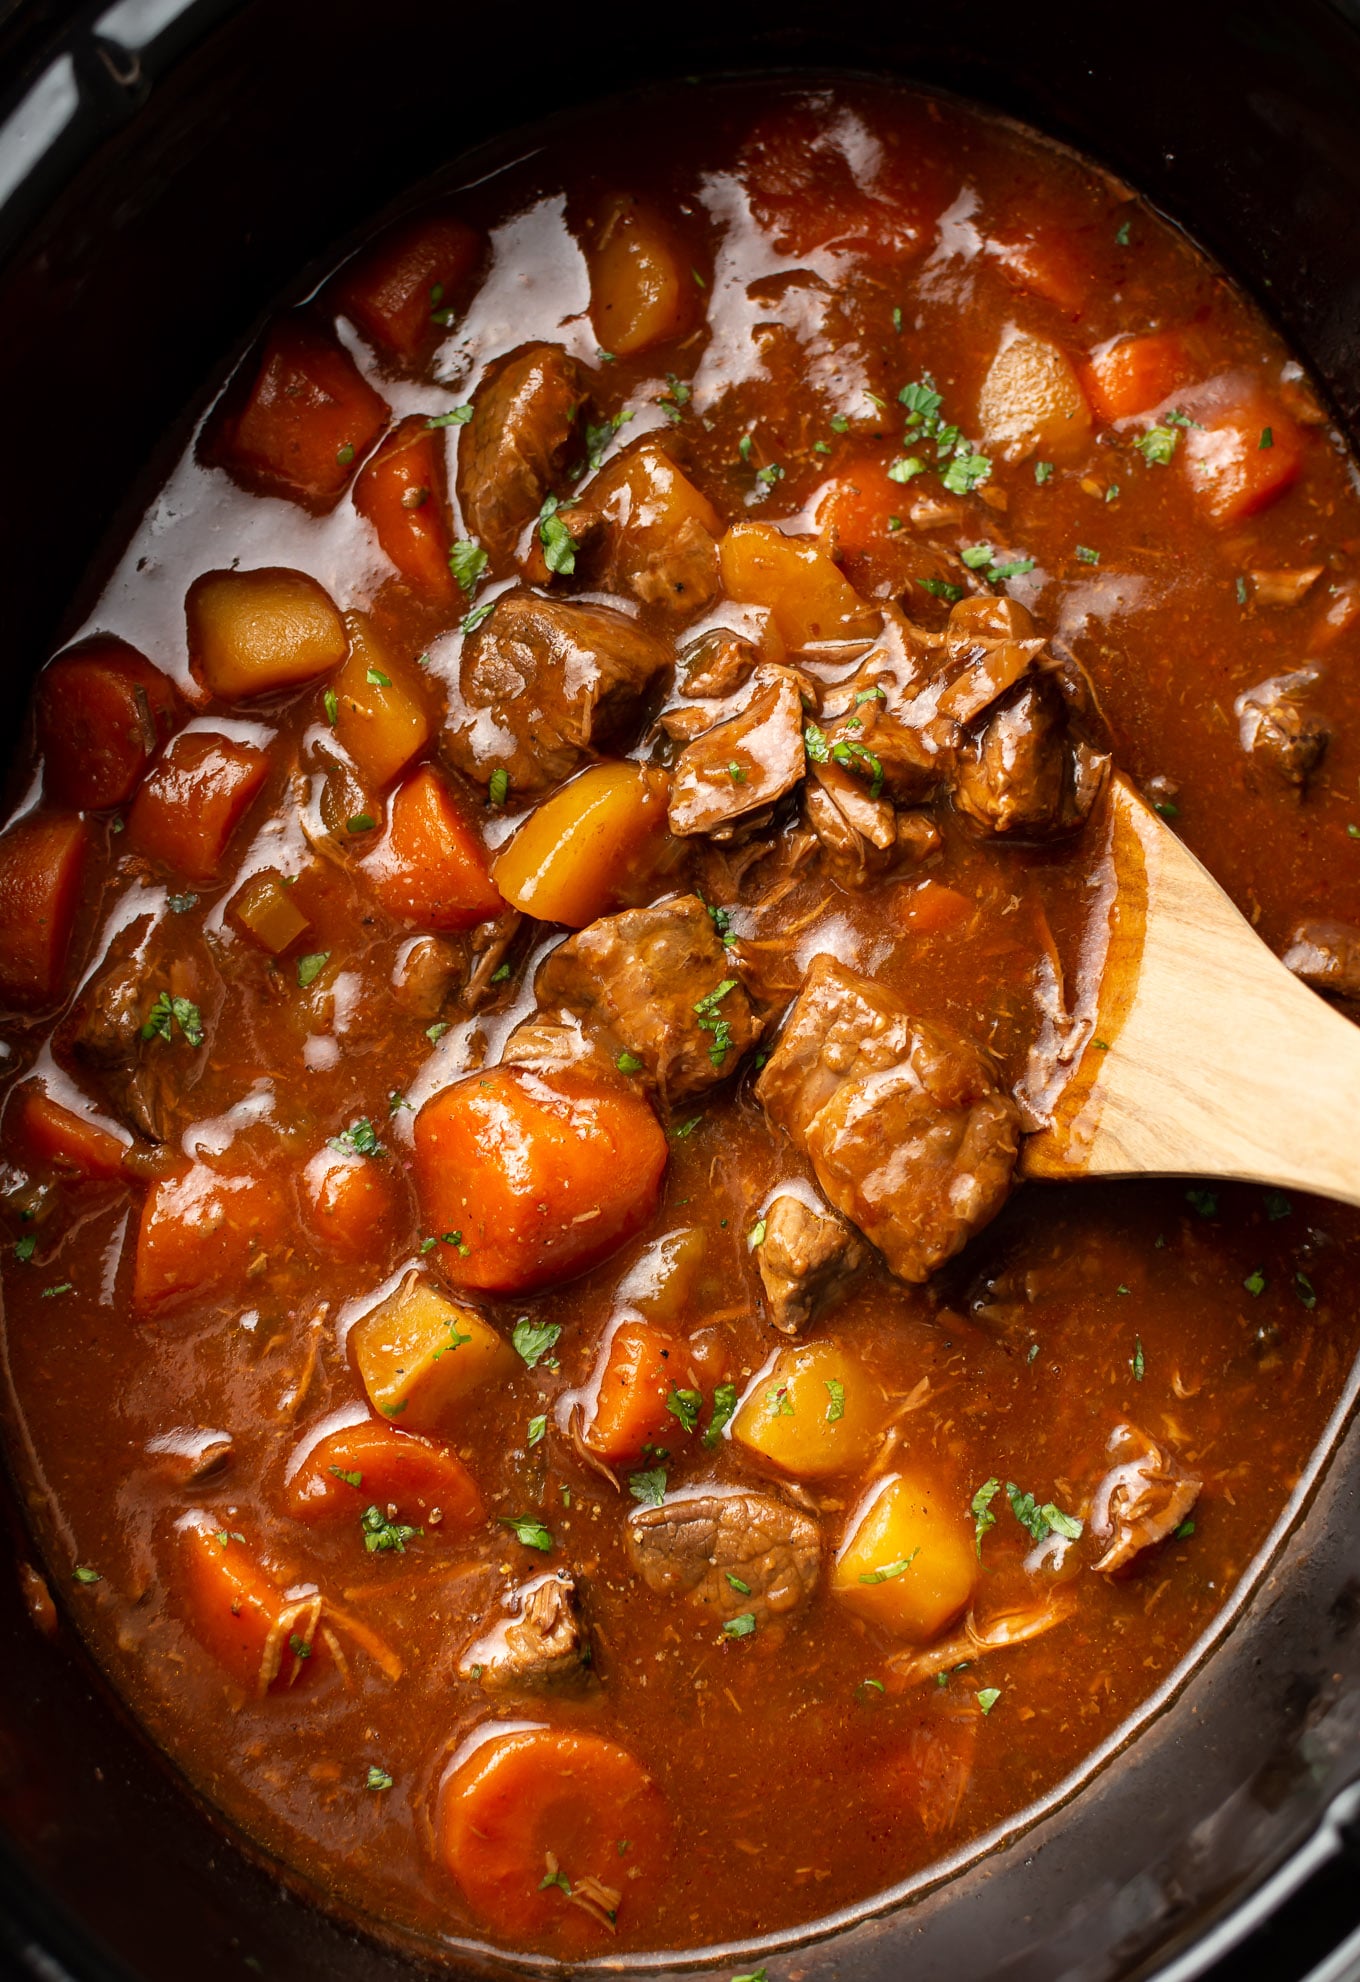 https://www.saltandlavender.com/wp-content/uploads/2018/01/crockpot-beef-stew-recipe-1.jpg